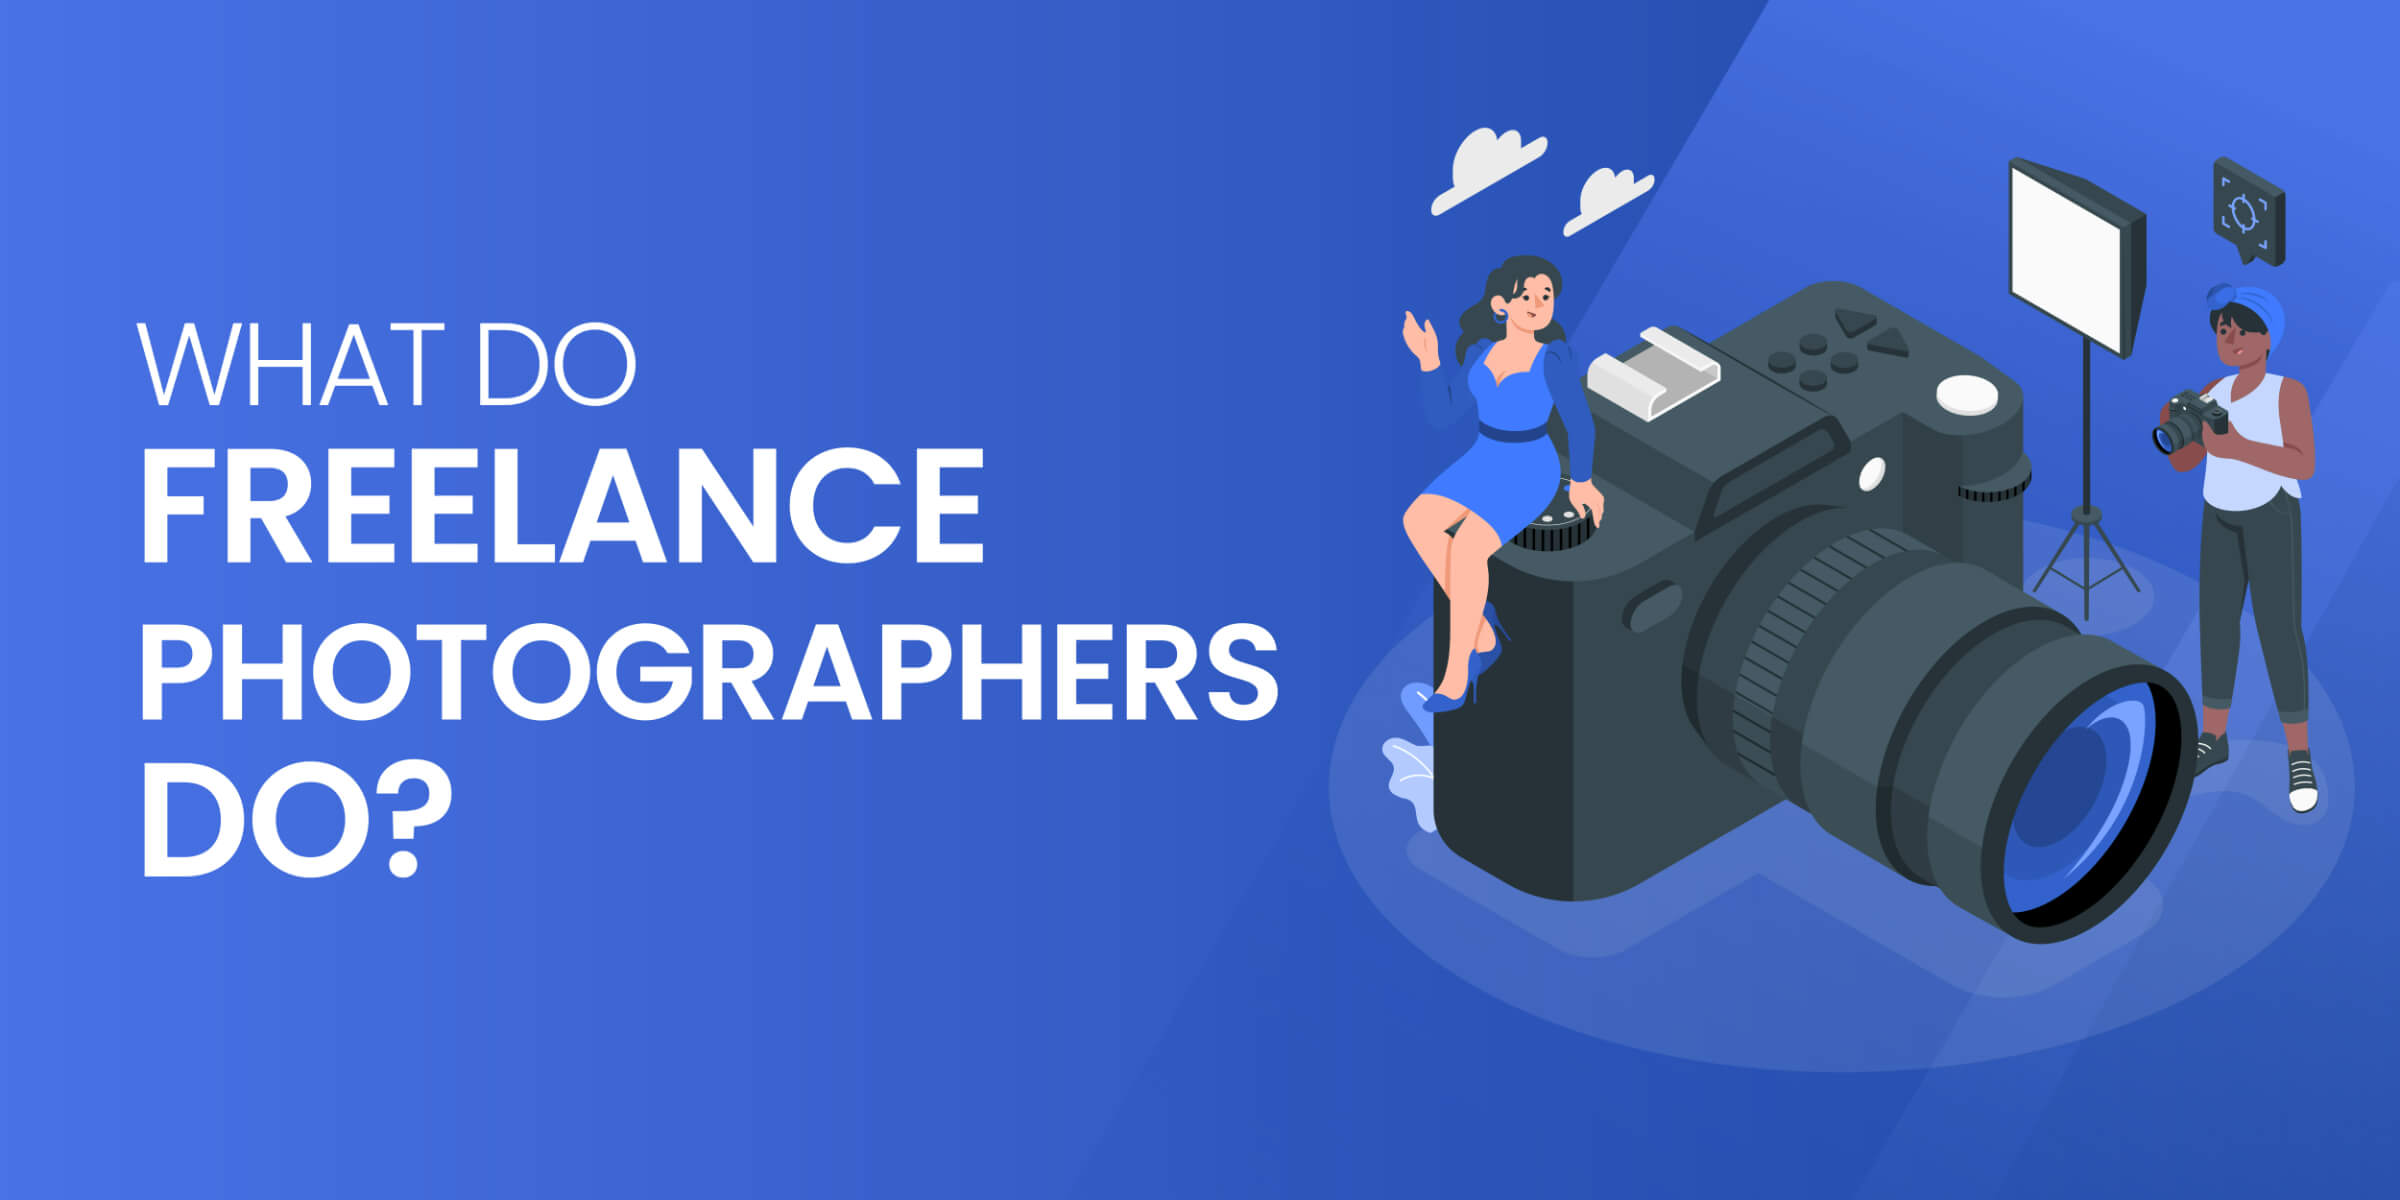 What Do Freelance Photographers Do